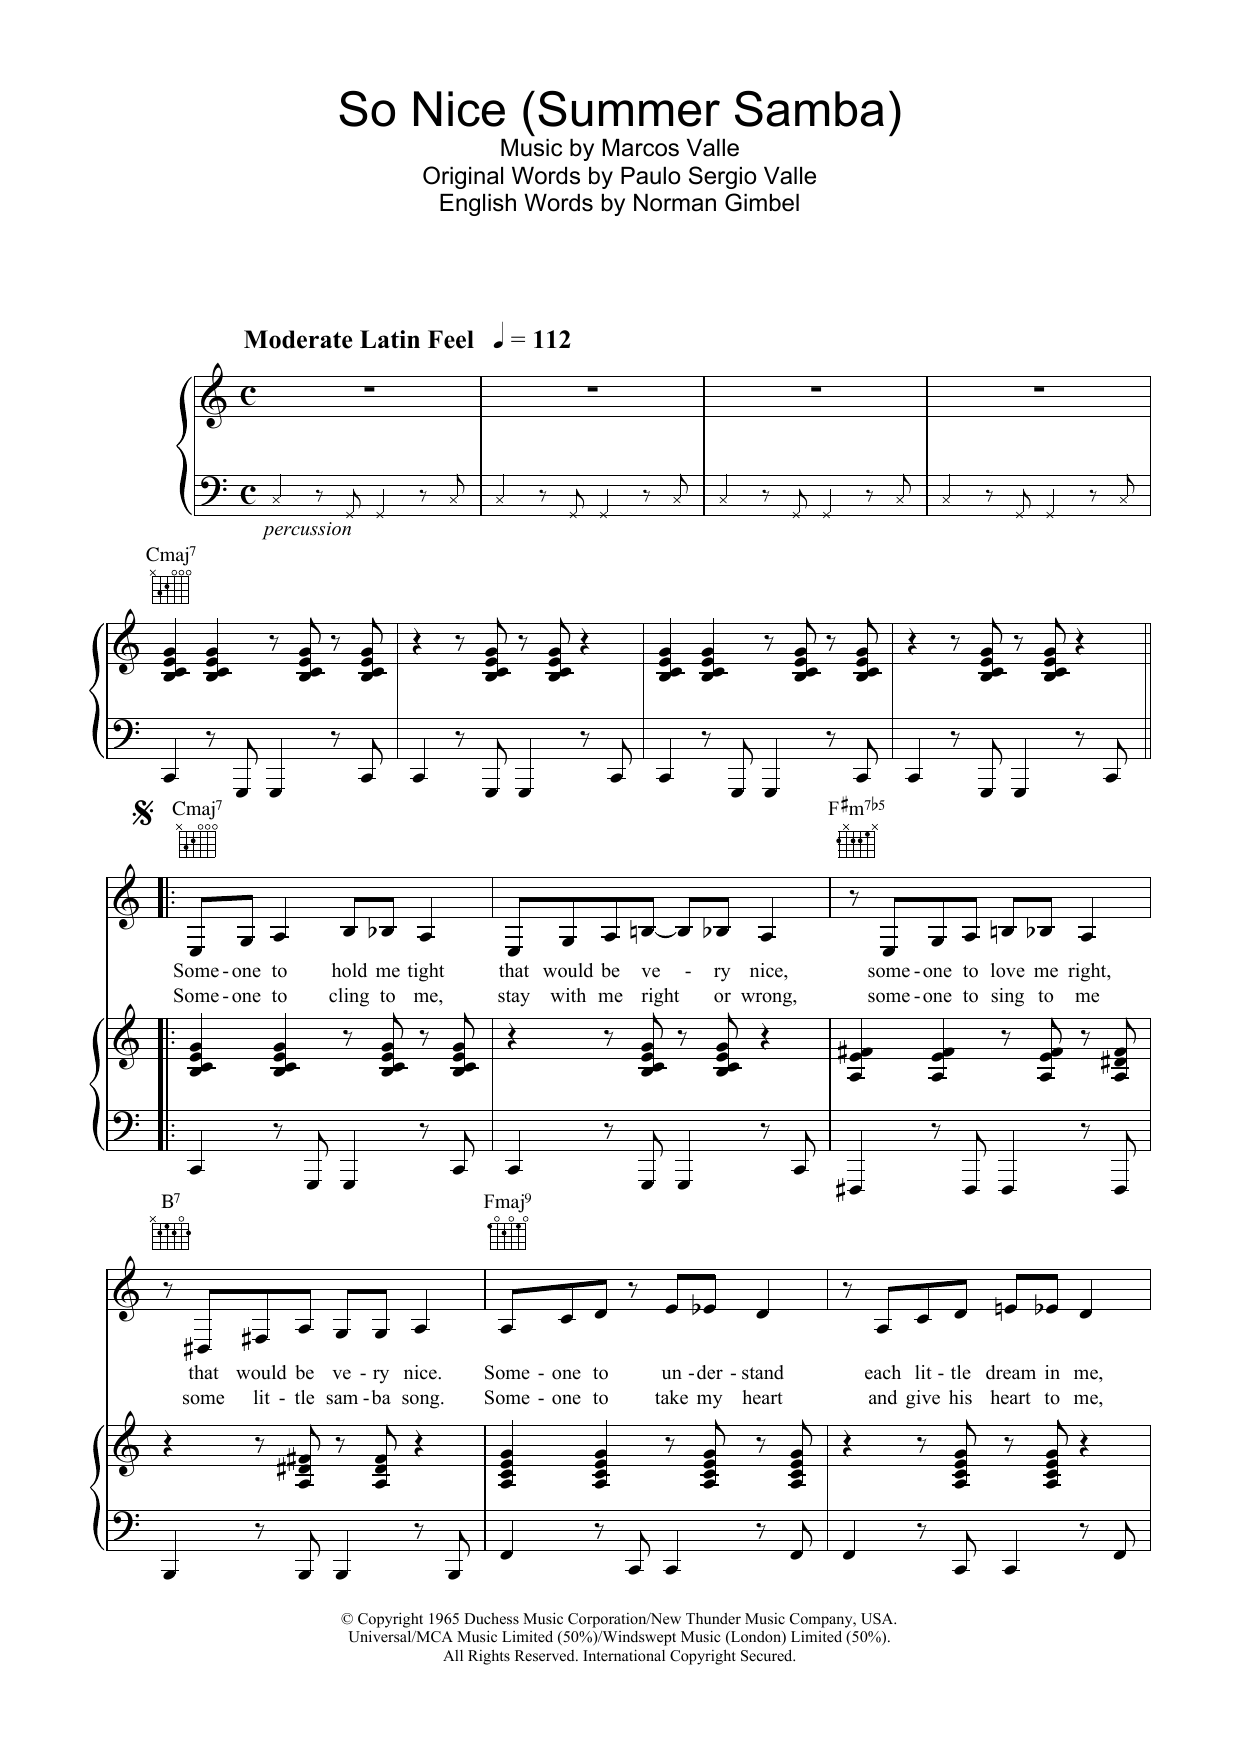 Bebel Gilberto So Nice (Summer Samba) Sheet Music Notes & Chords for Clarinet - Download or Print PDF